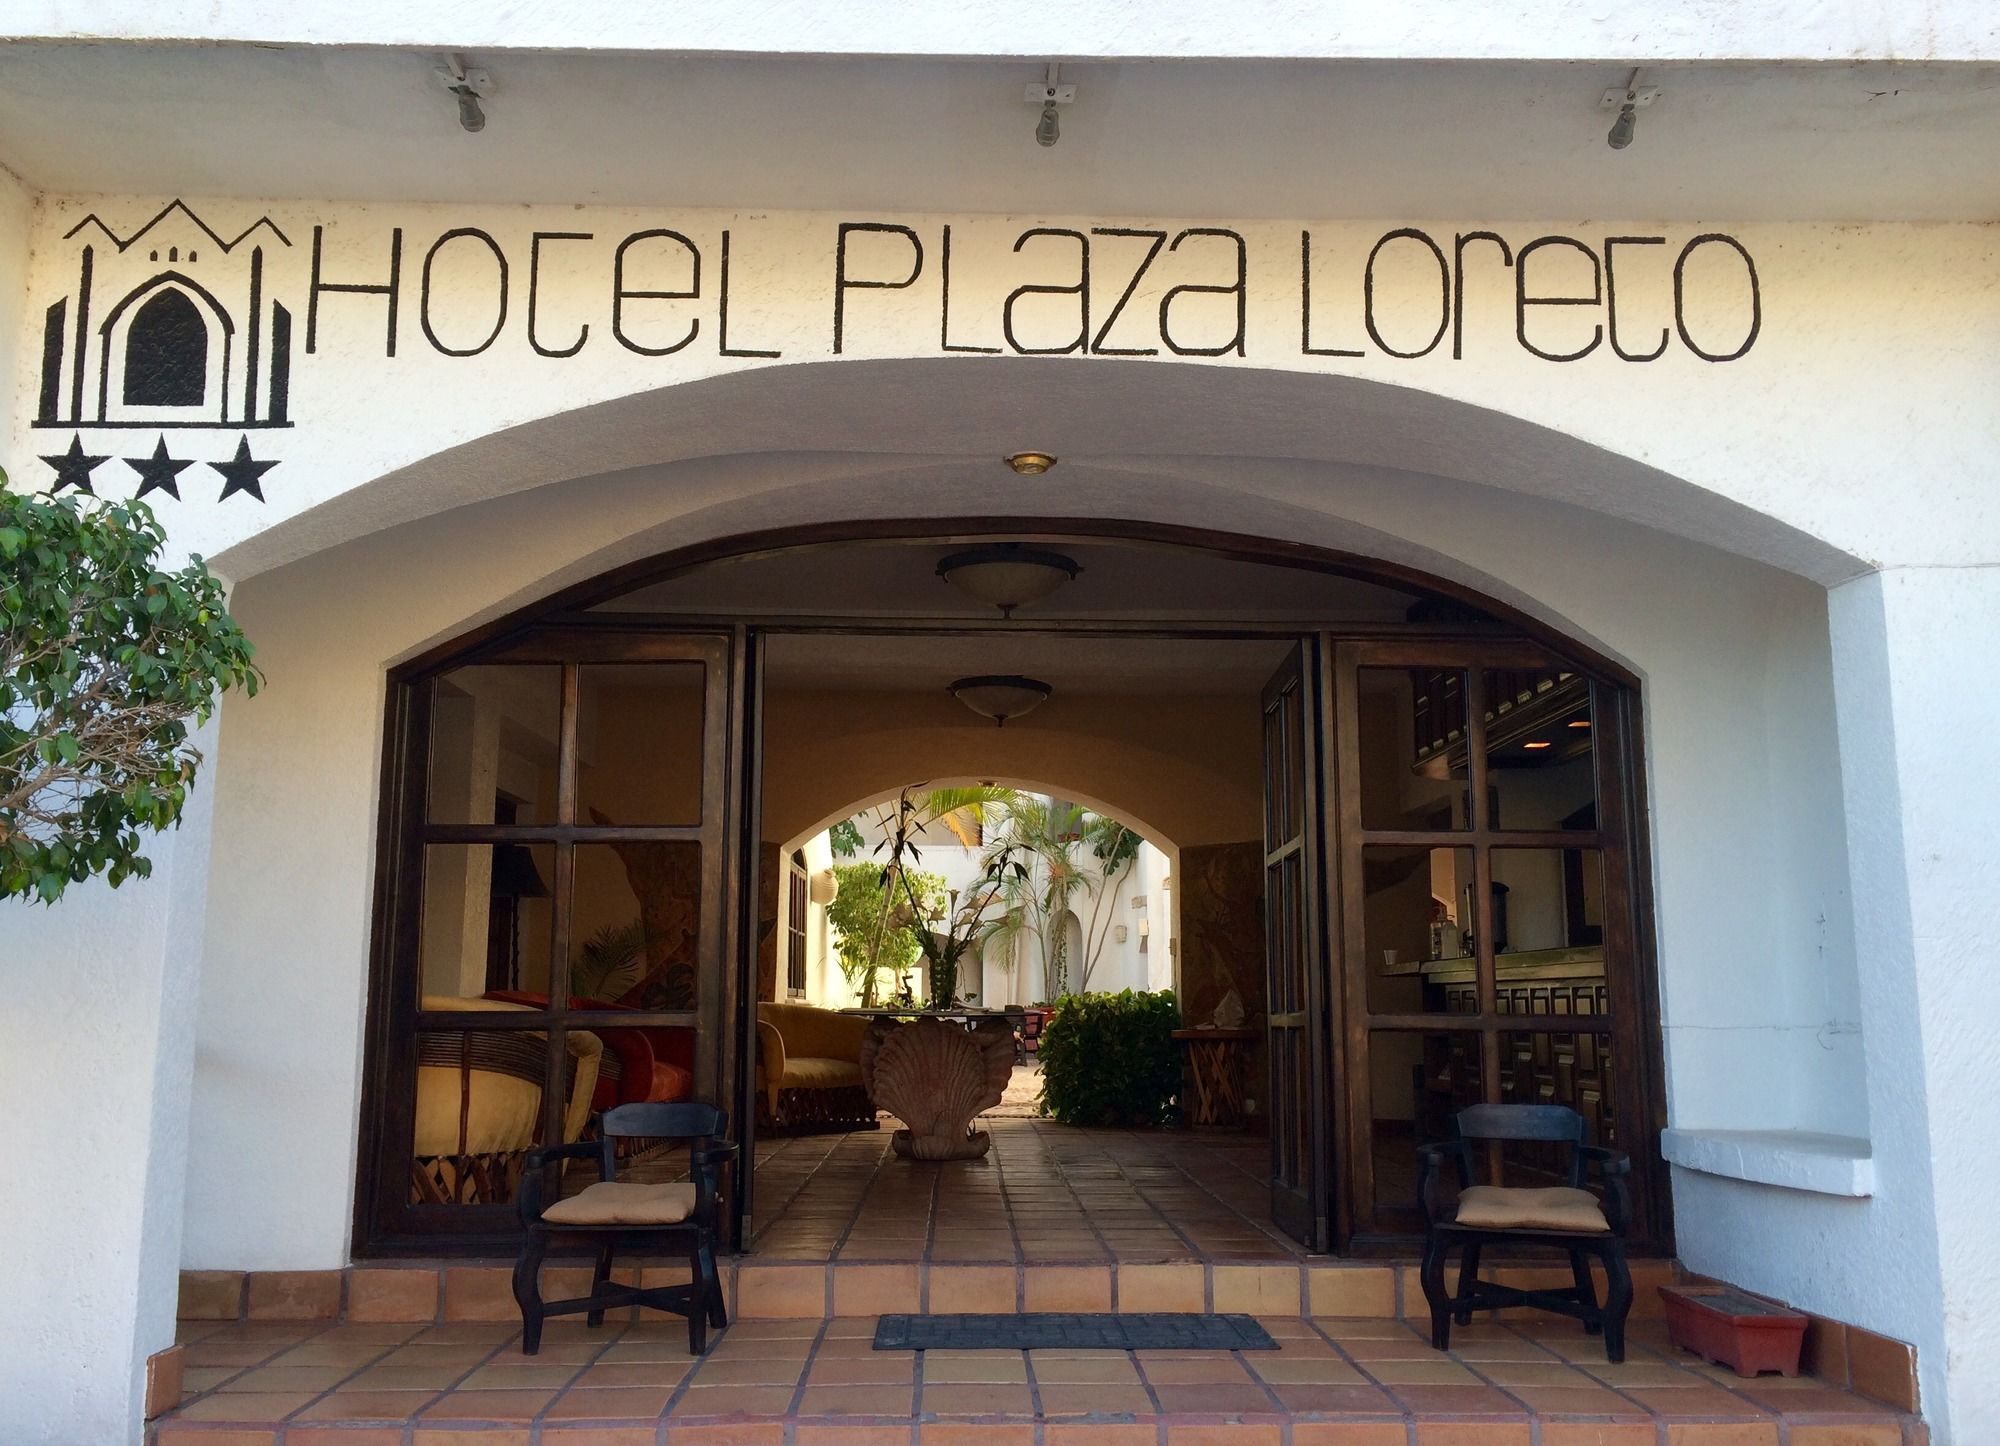 Latest Hotel Plaza Loreto Map,Address, Nearest Station & Airport 2023 |  